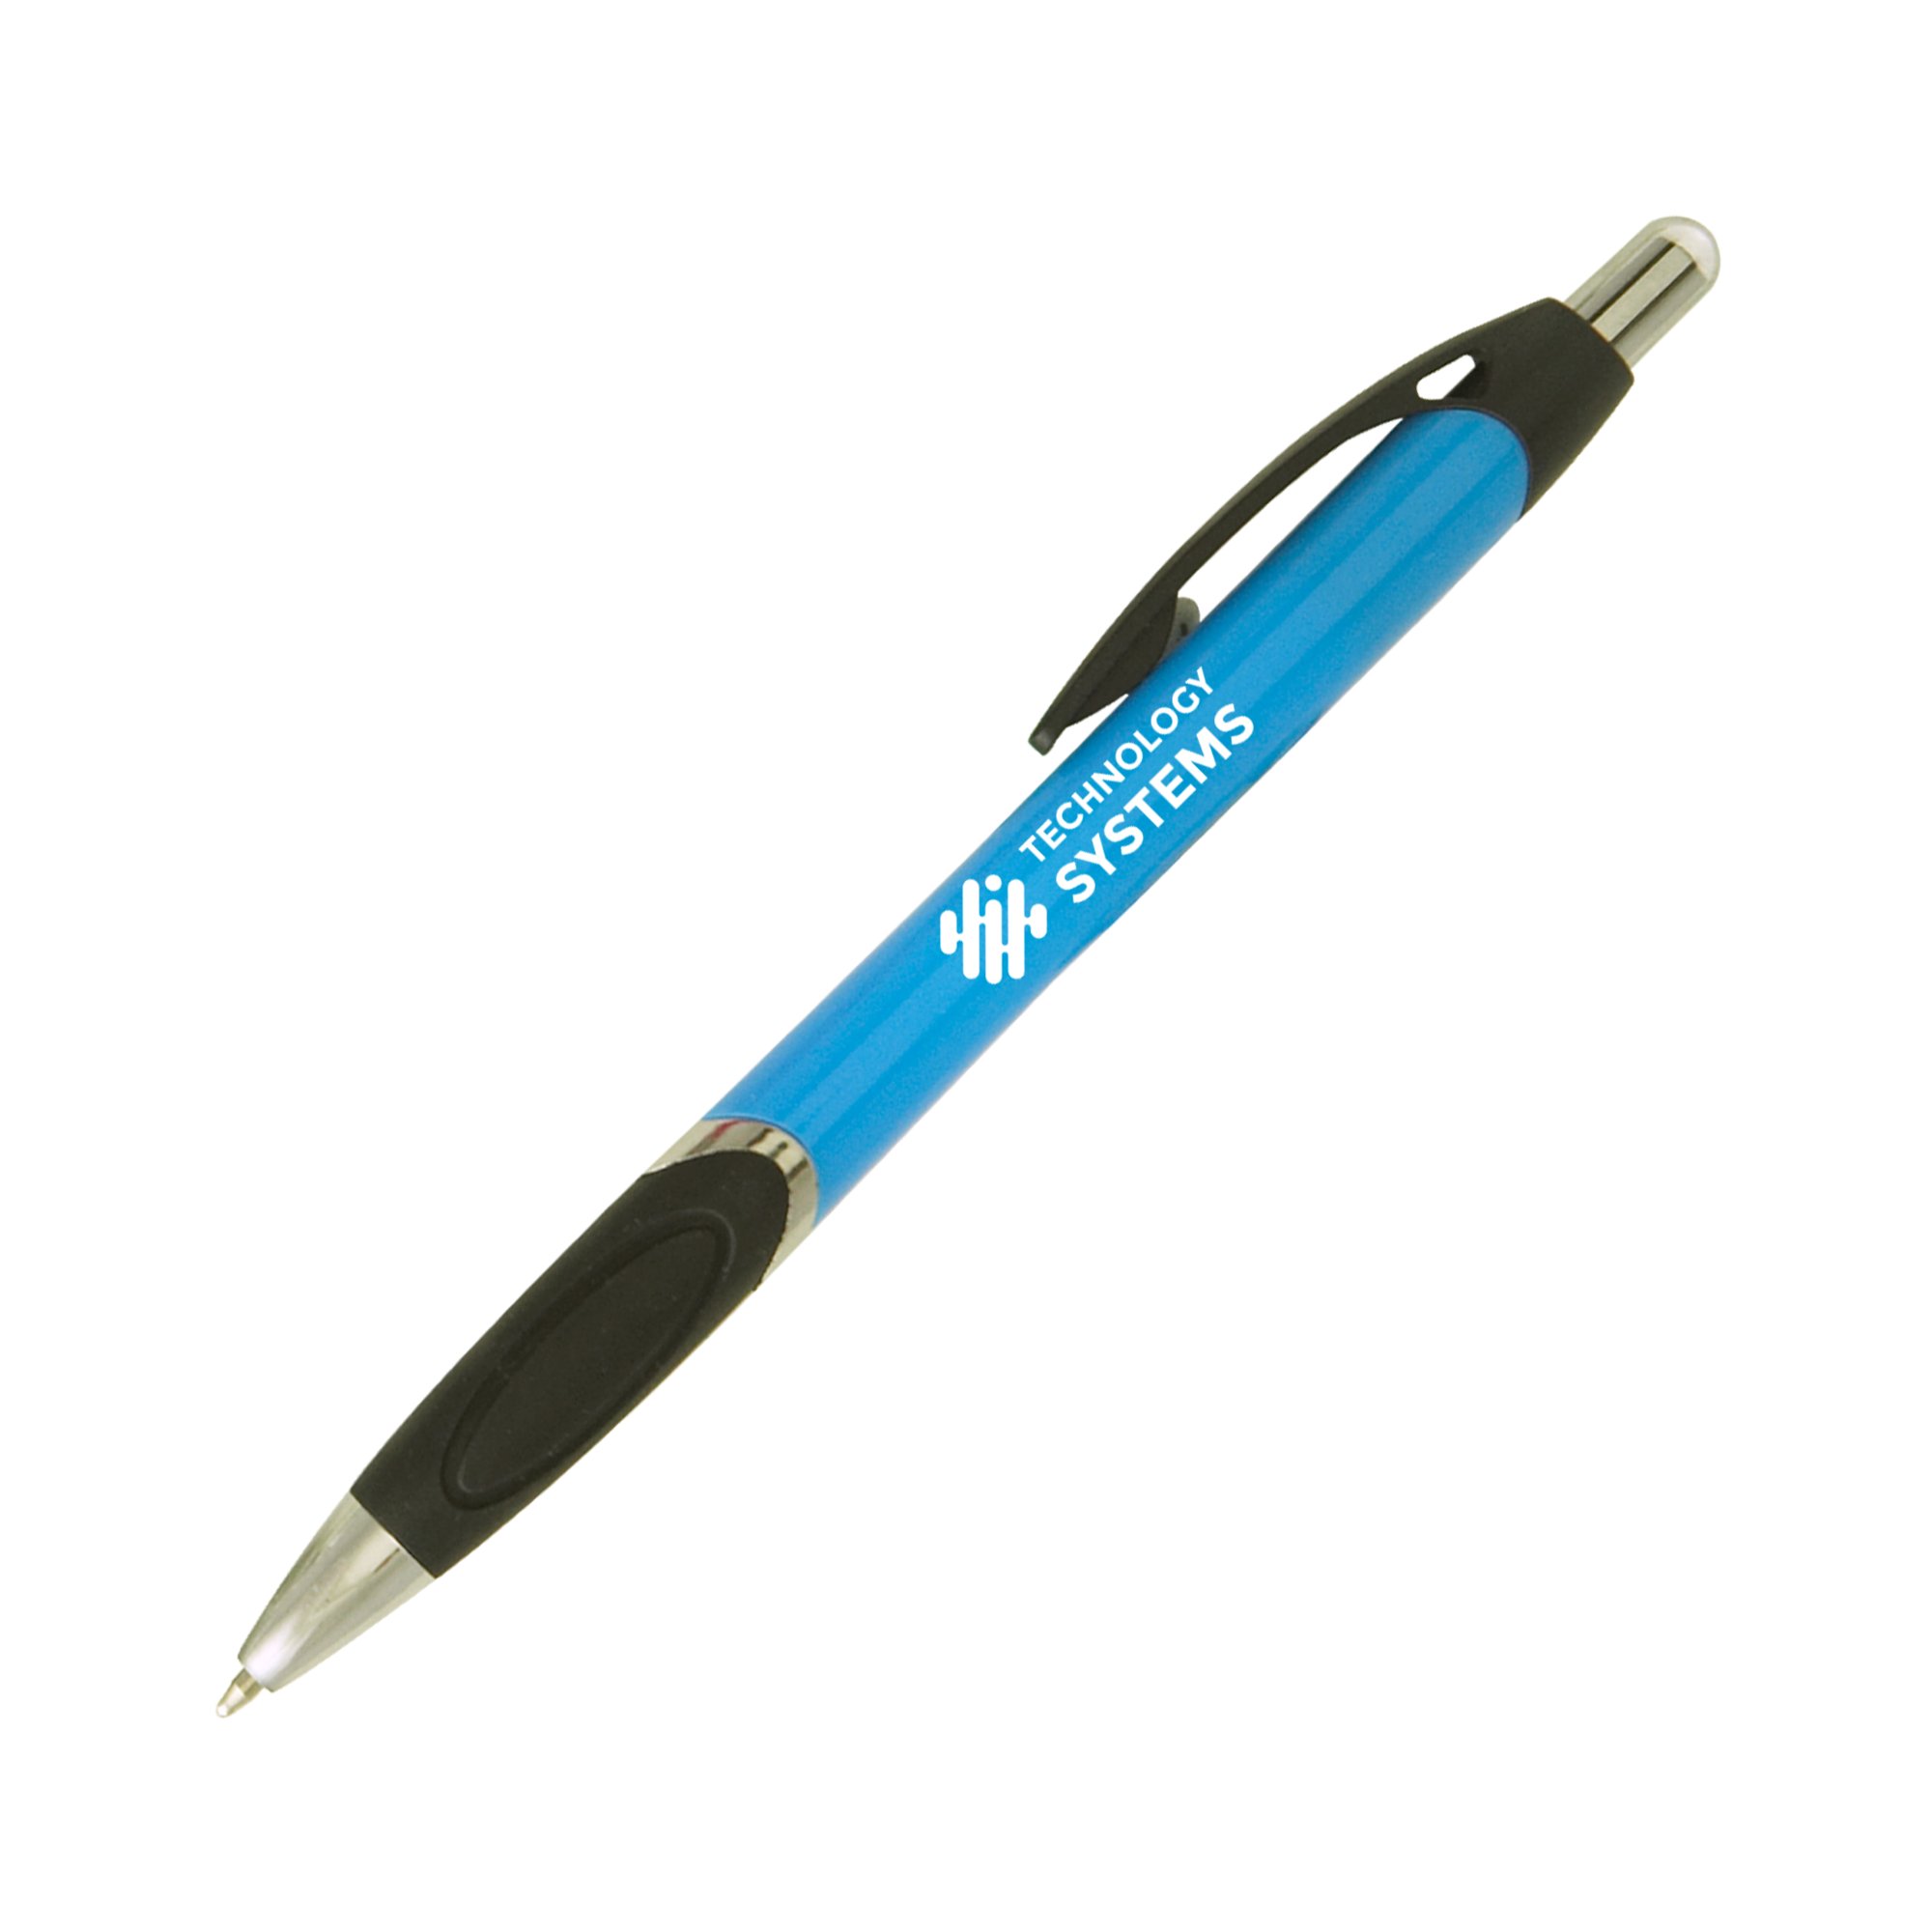 Bright Parfait Pen: Custom Printed Plastic Retractable Pen with Logo